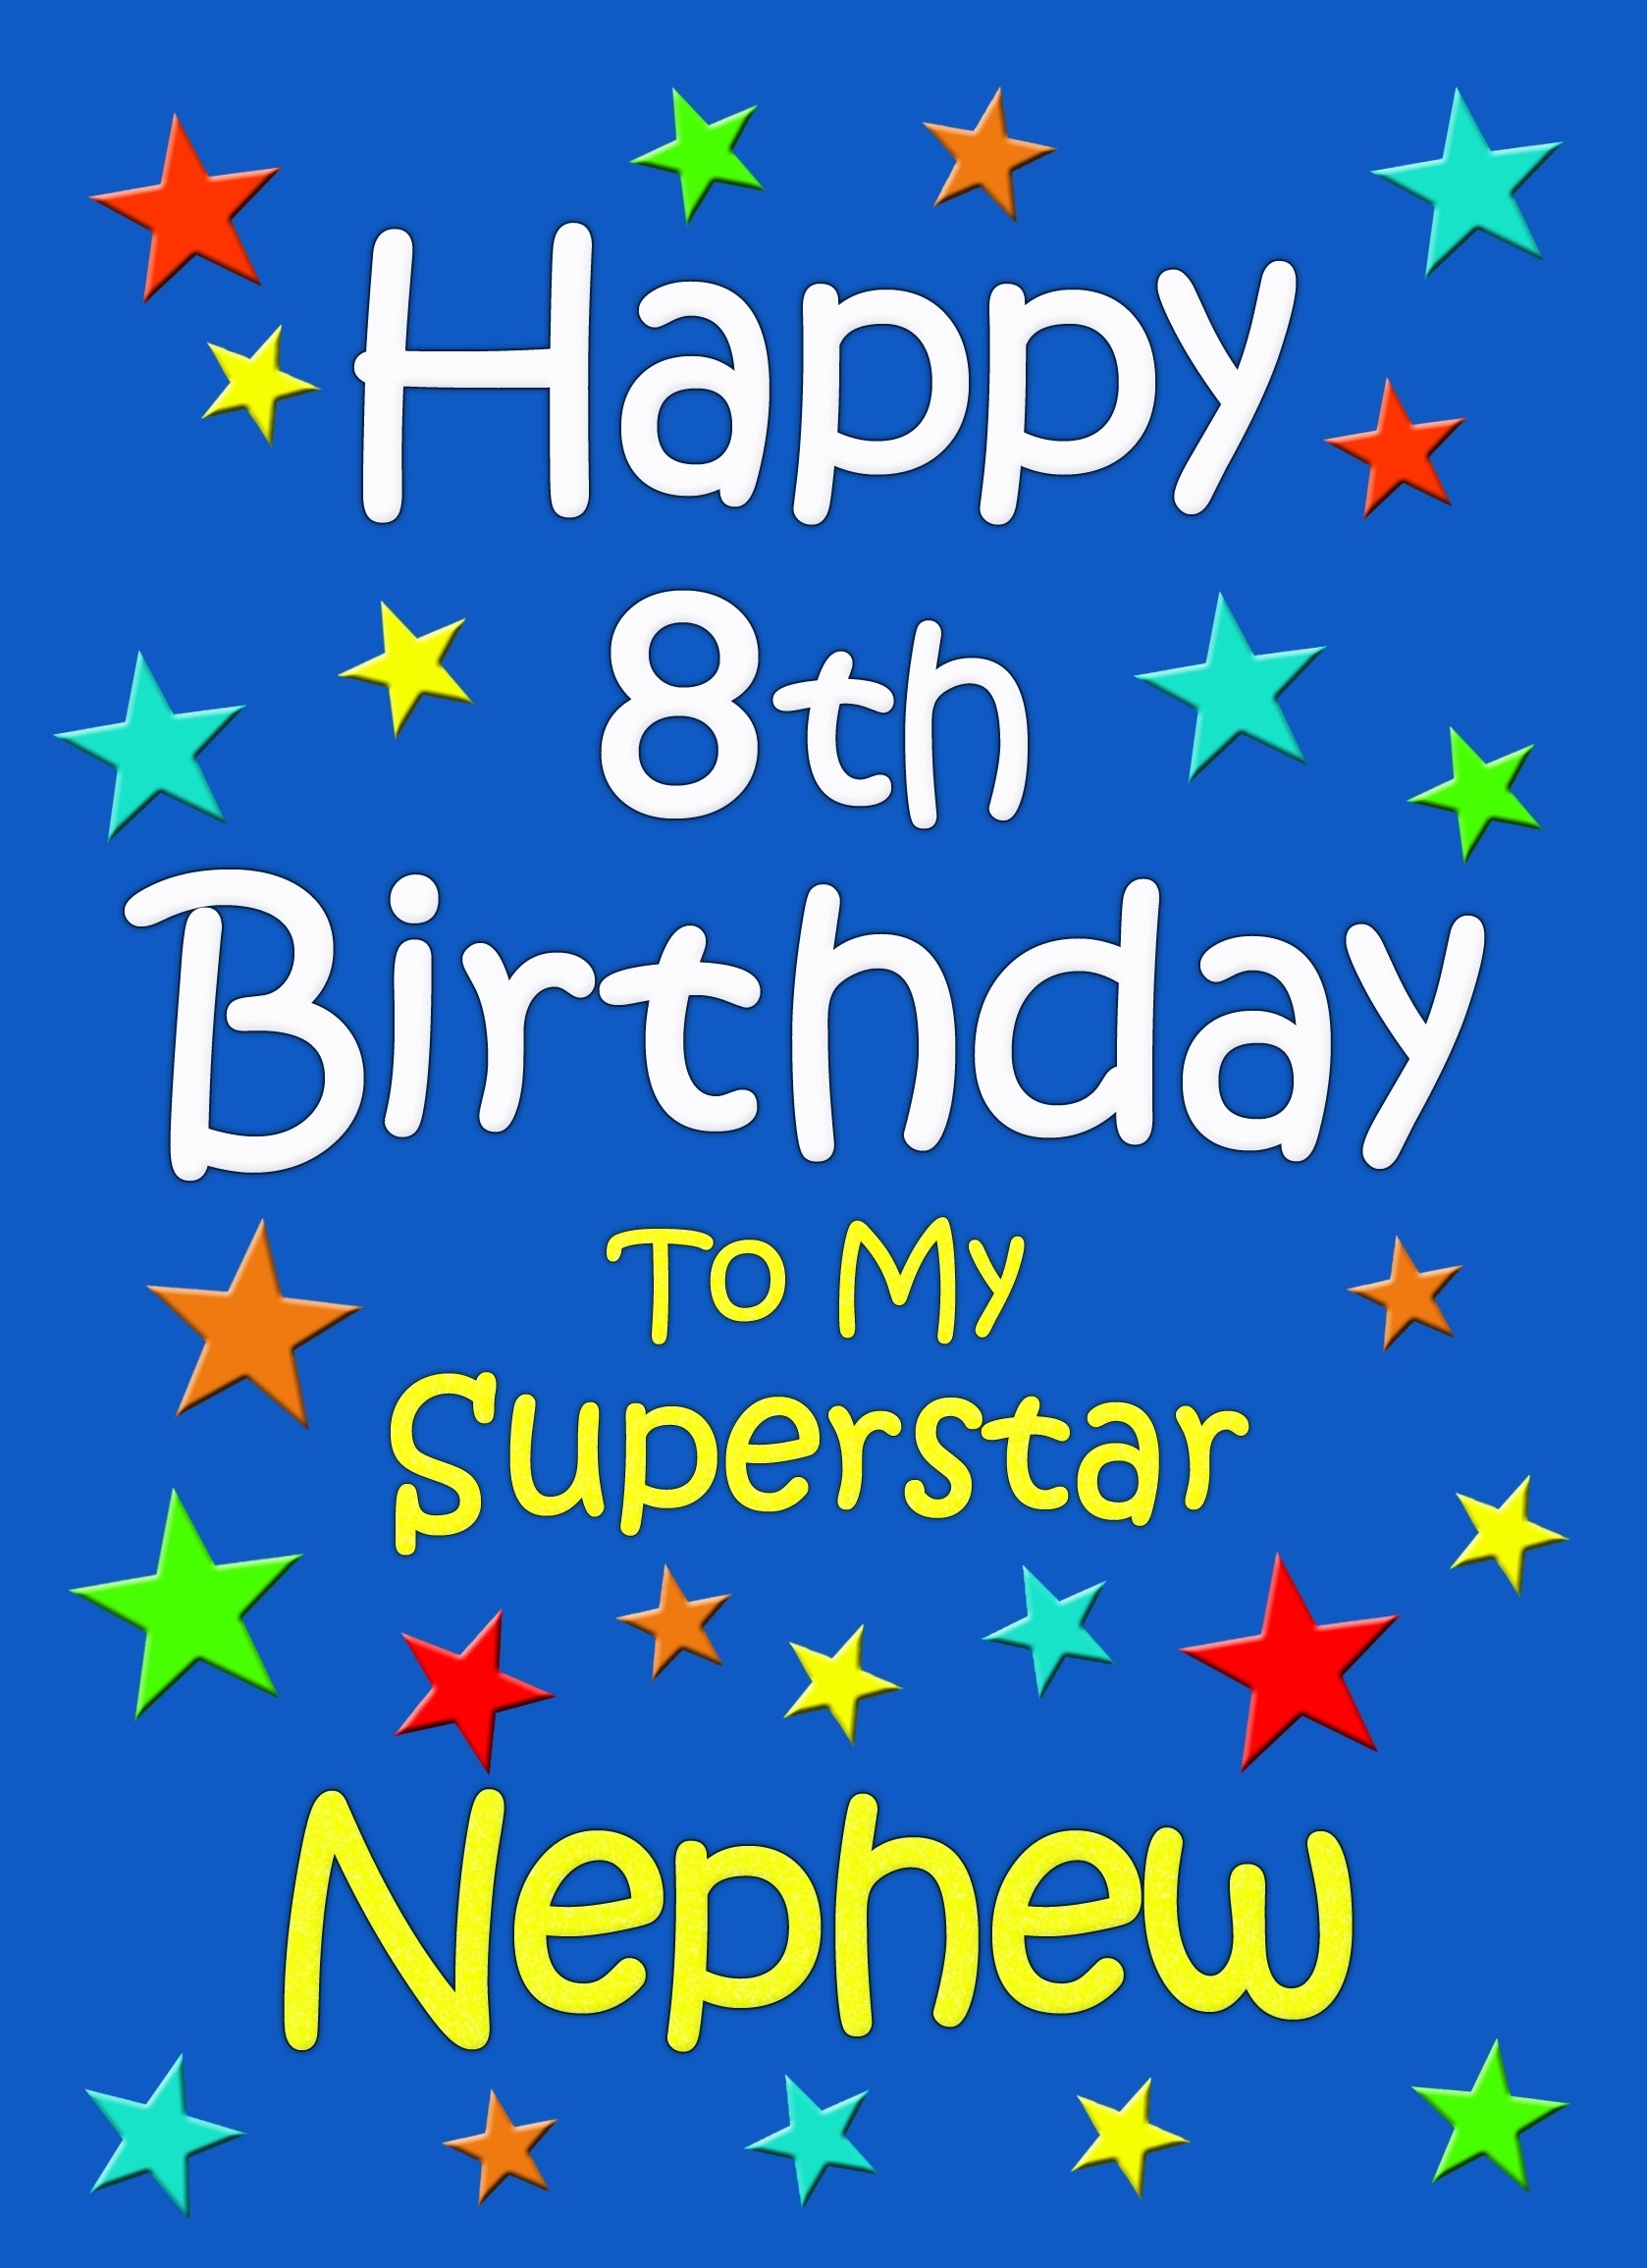 Nephew 8th Birthday Card (Blue)